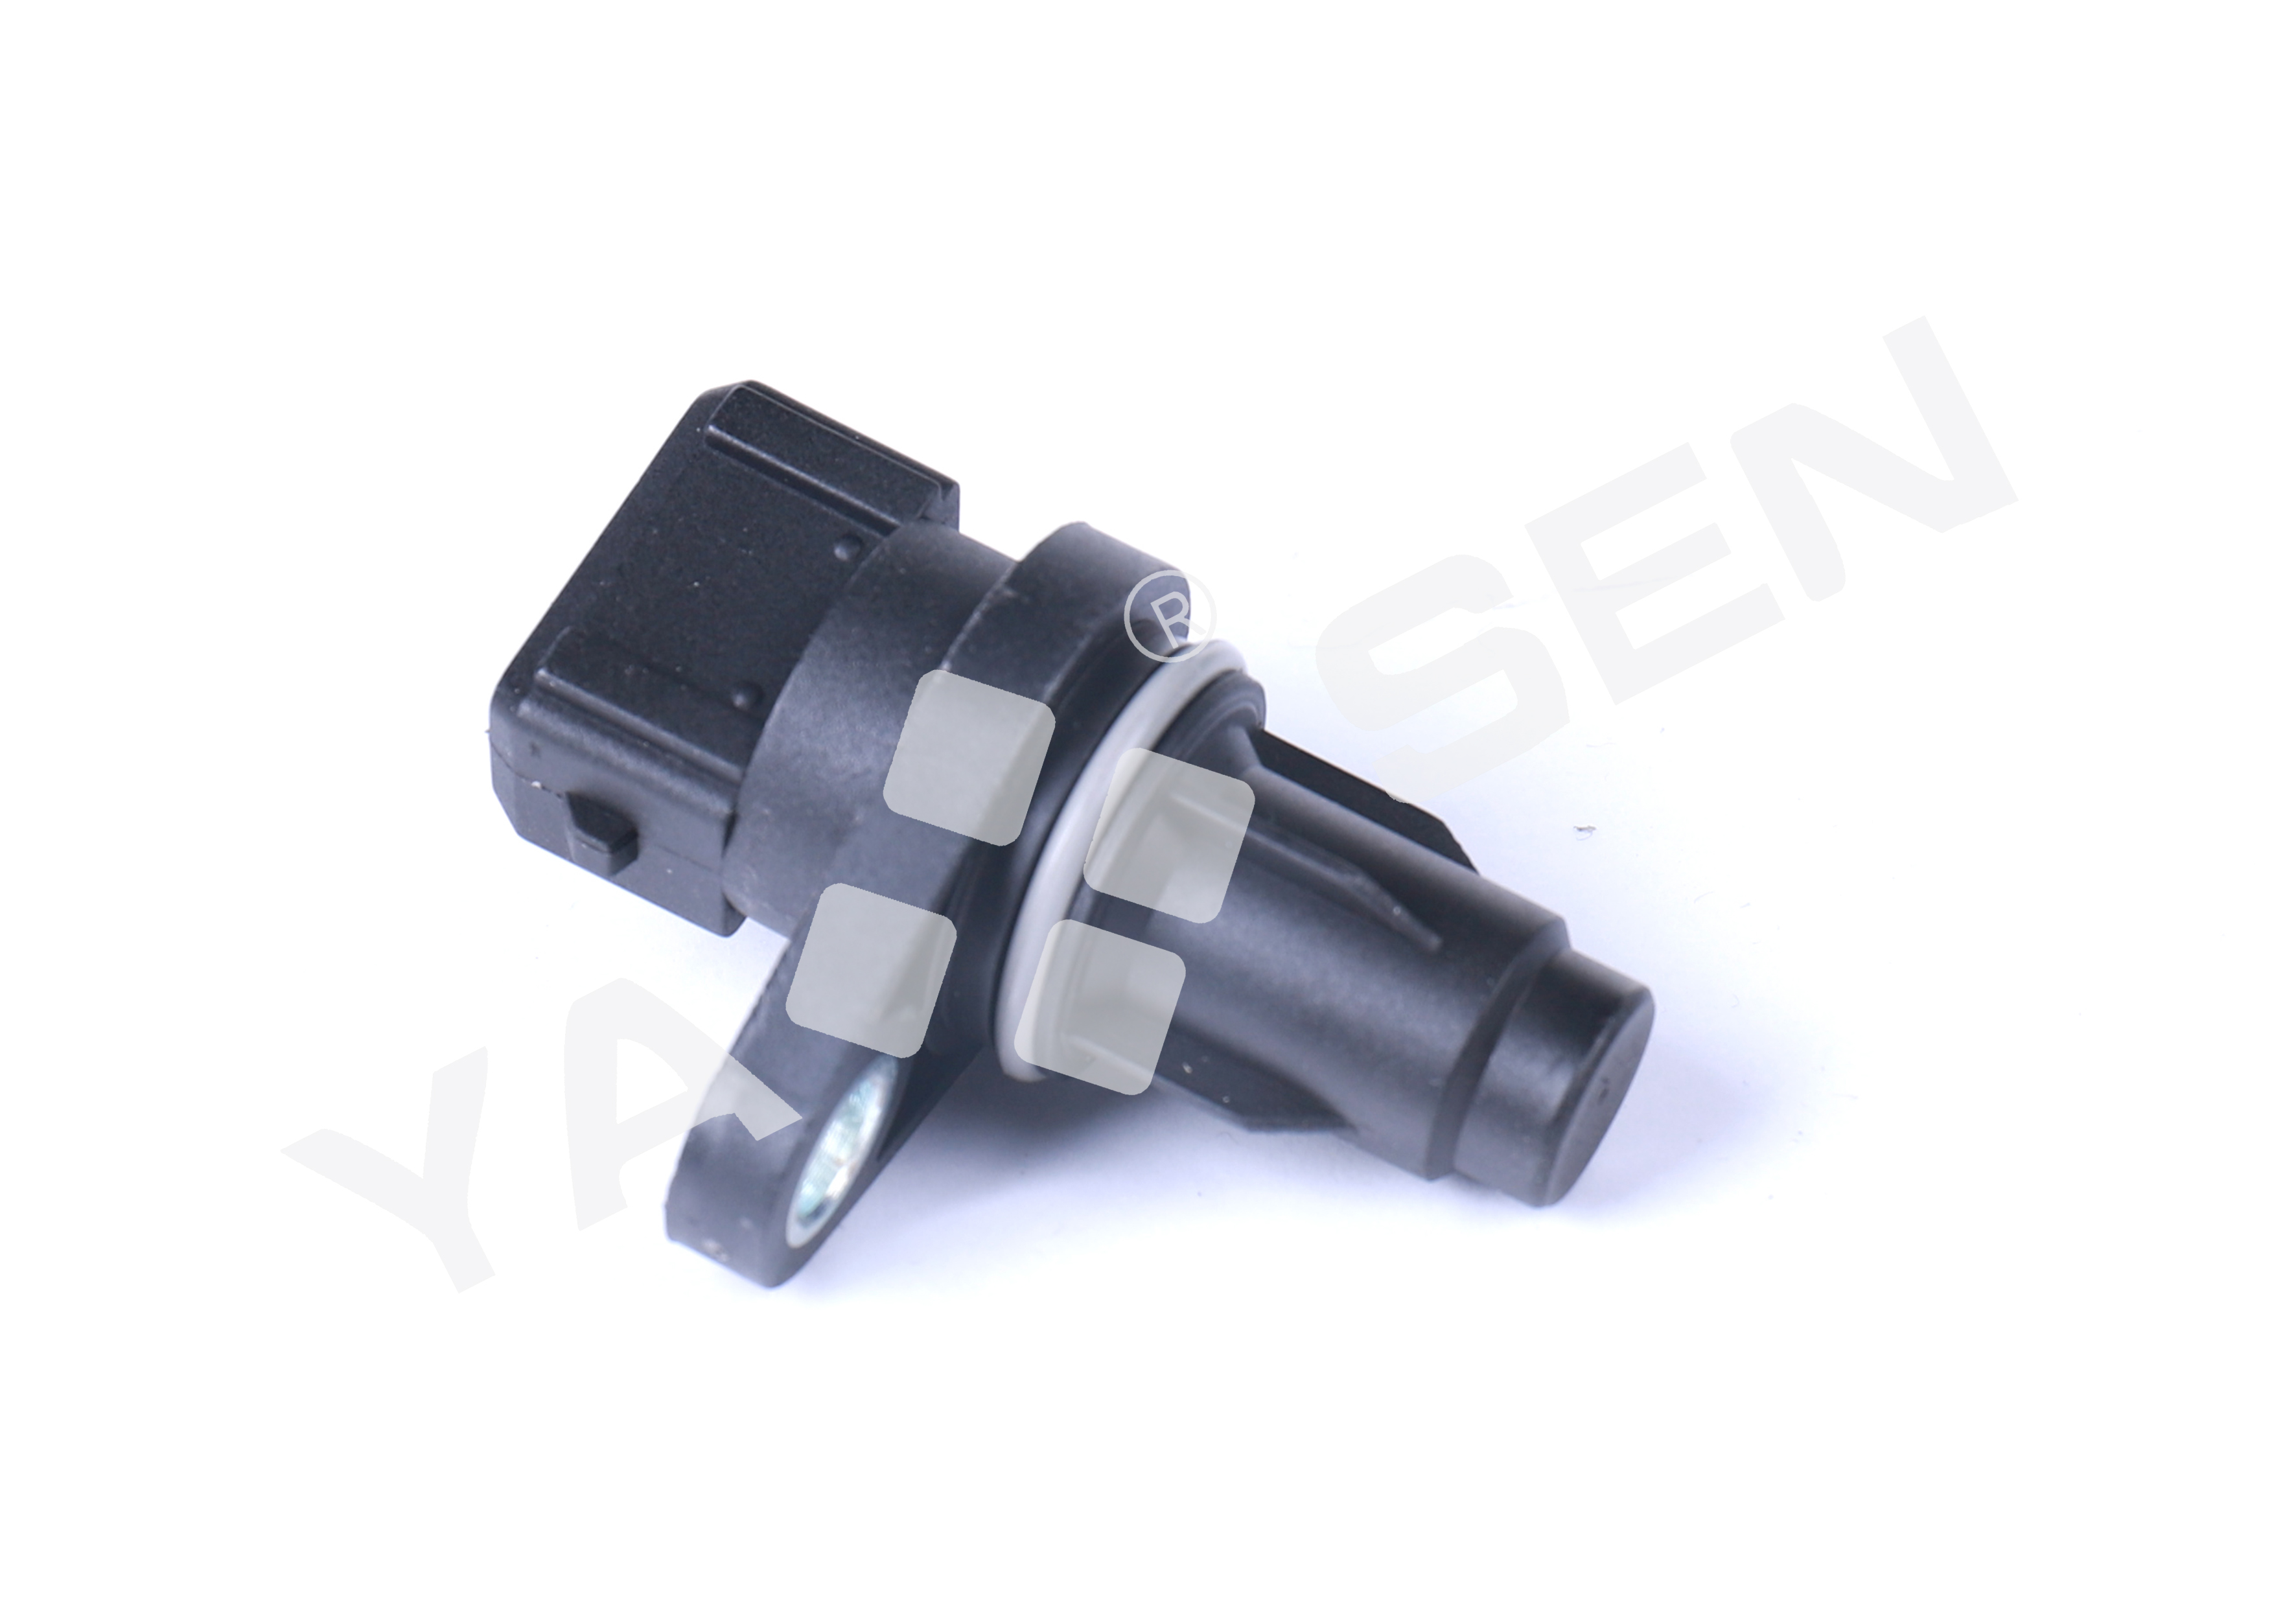 Auto Camshaft position sensor  for HYUNDAI/KIA, 5S7207 SU8698 1802-306150 71-5275 96191 CSS1780 39350-26900 180-0372 PC780 CSS128